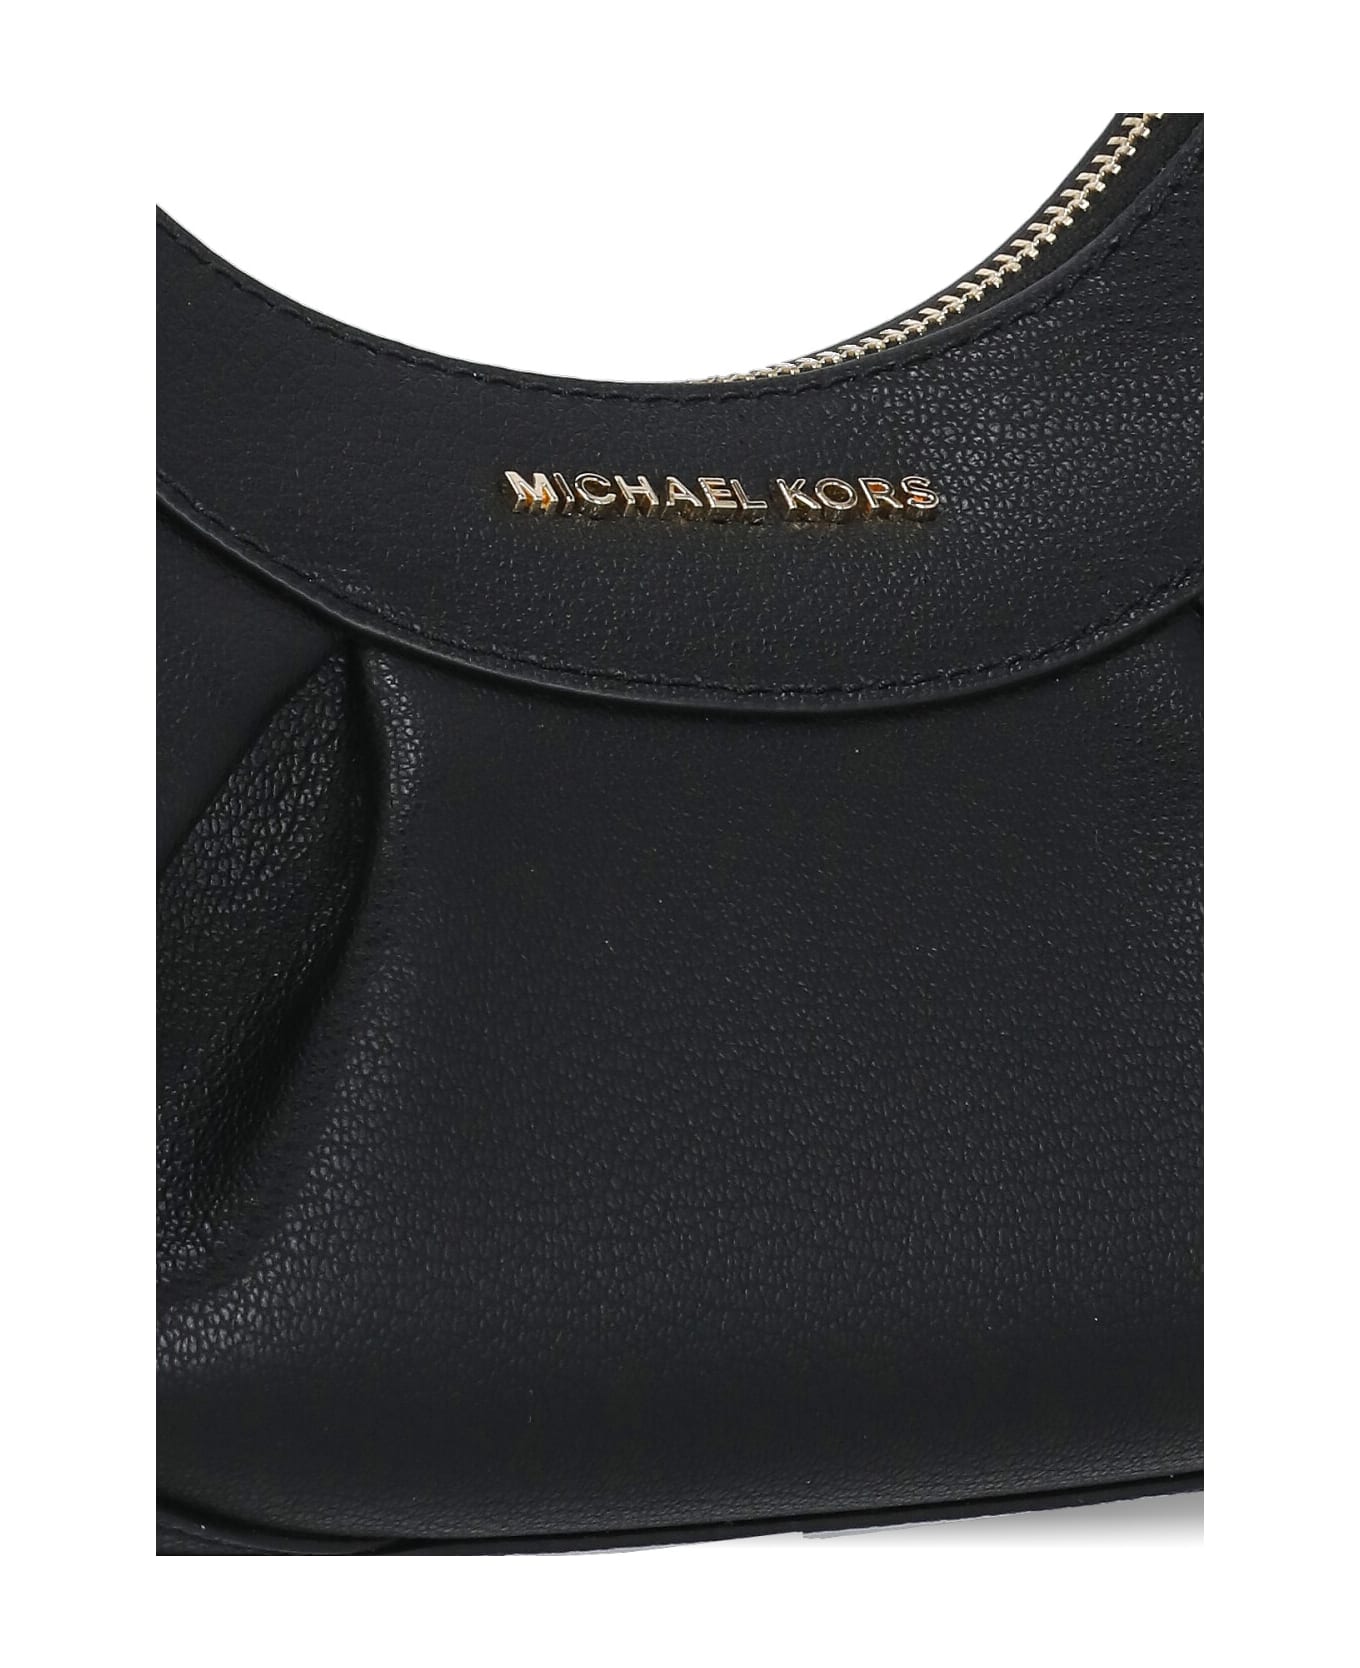 Michael Kors Women's Enzo Shoulder Bag